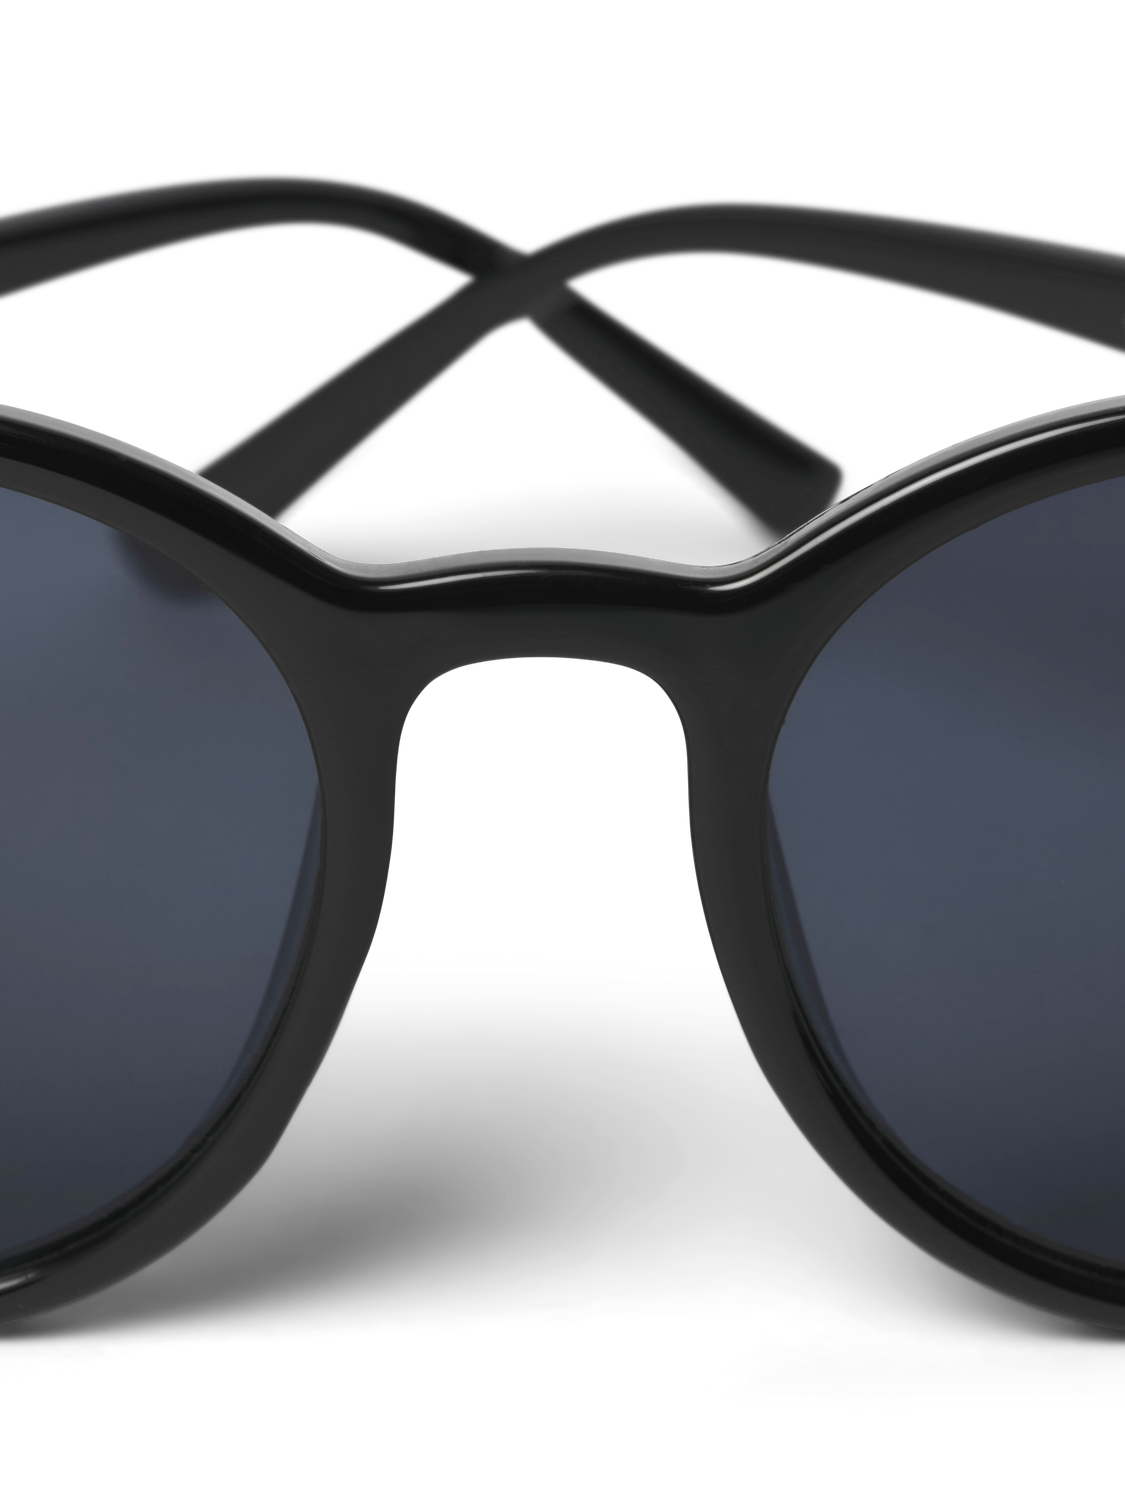 Jack & Jones Plastic Rectangular sunglasses -Pirate Black - 12262731